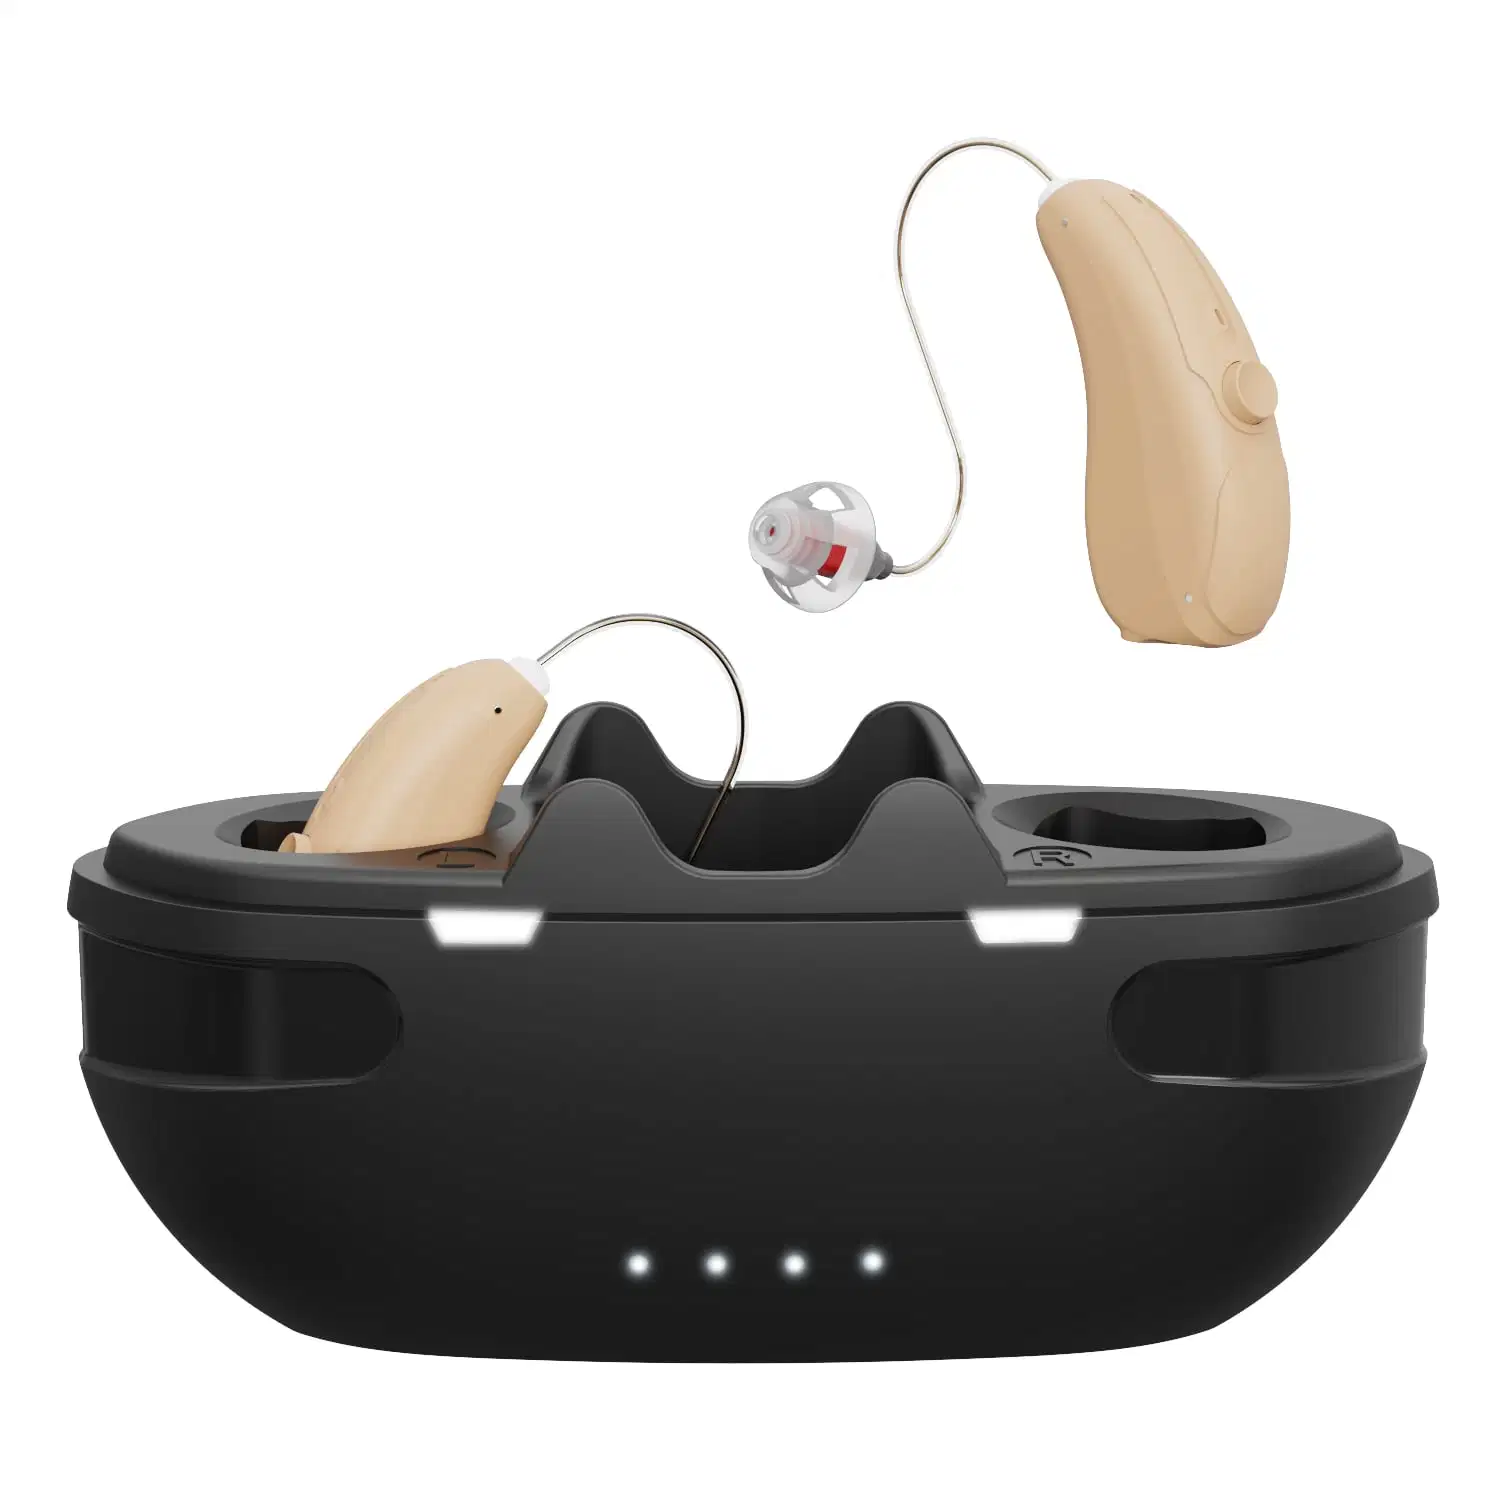 Nuevos productos APP Control dispositivos de audífonos recargables TV inalámbrica Auriculares Música auto-encajable audífonos